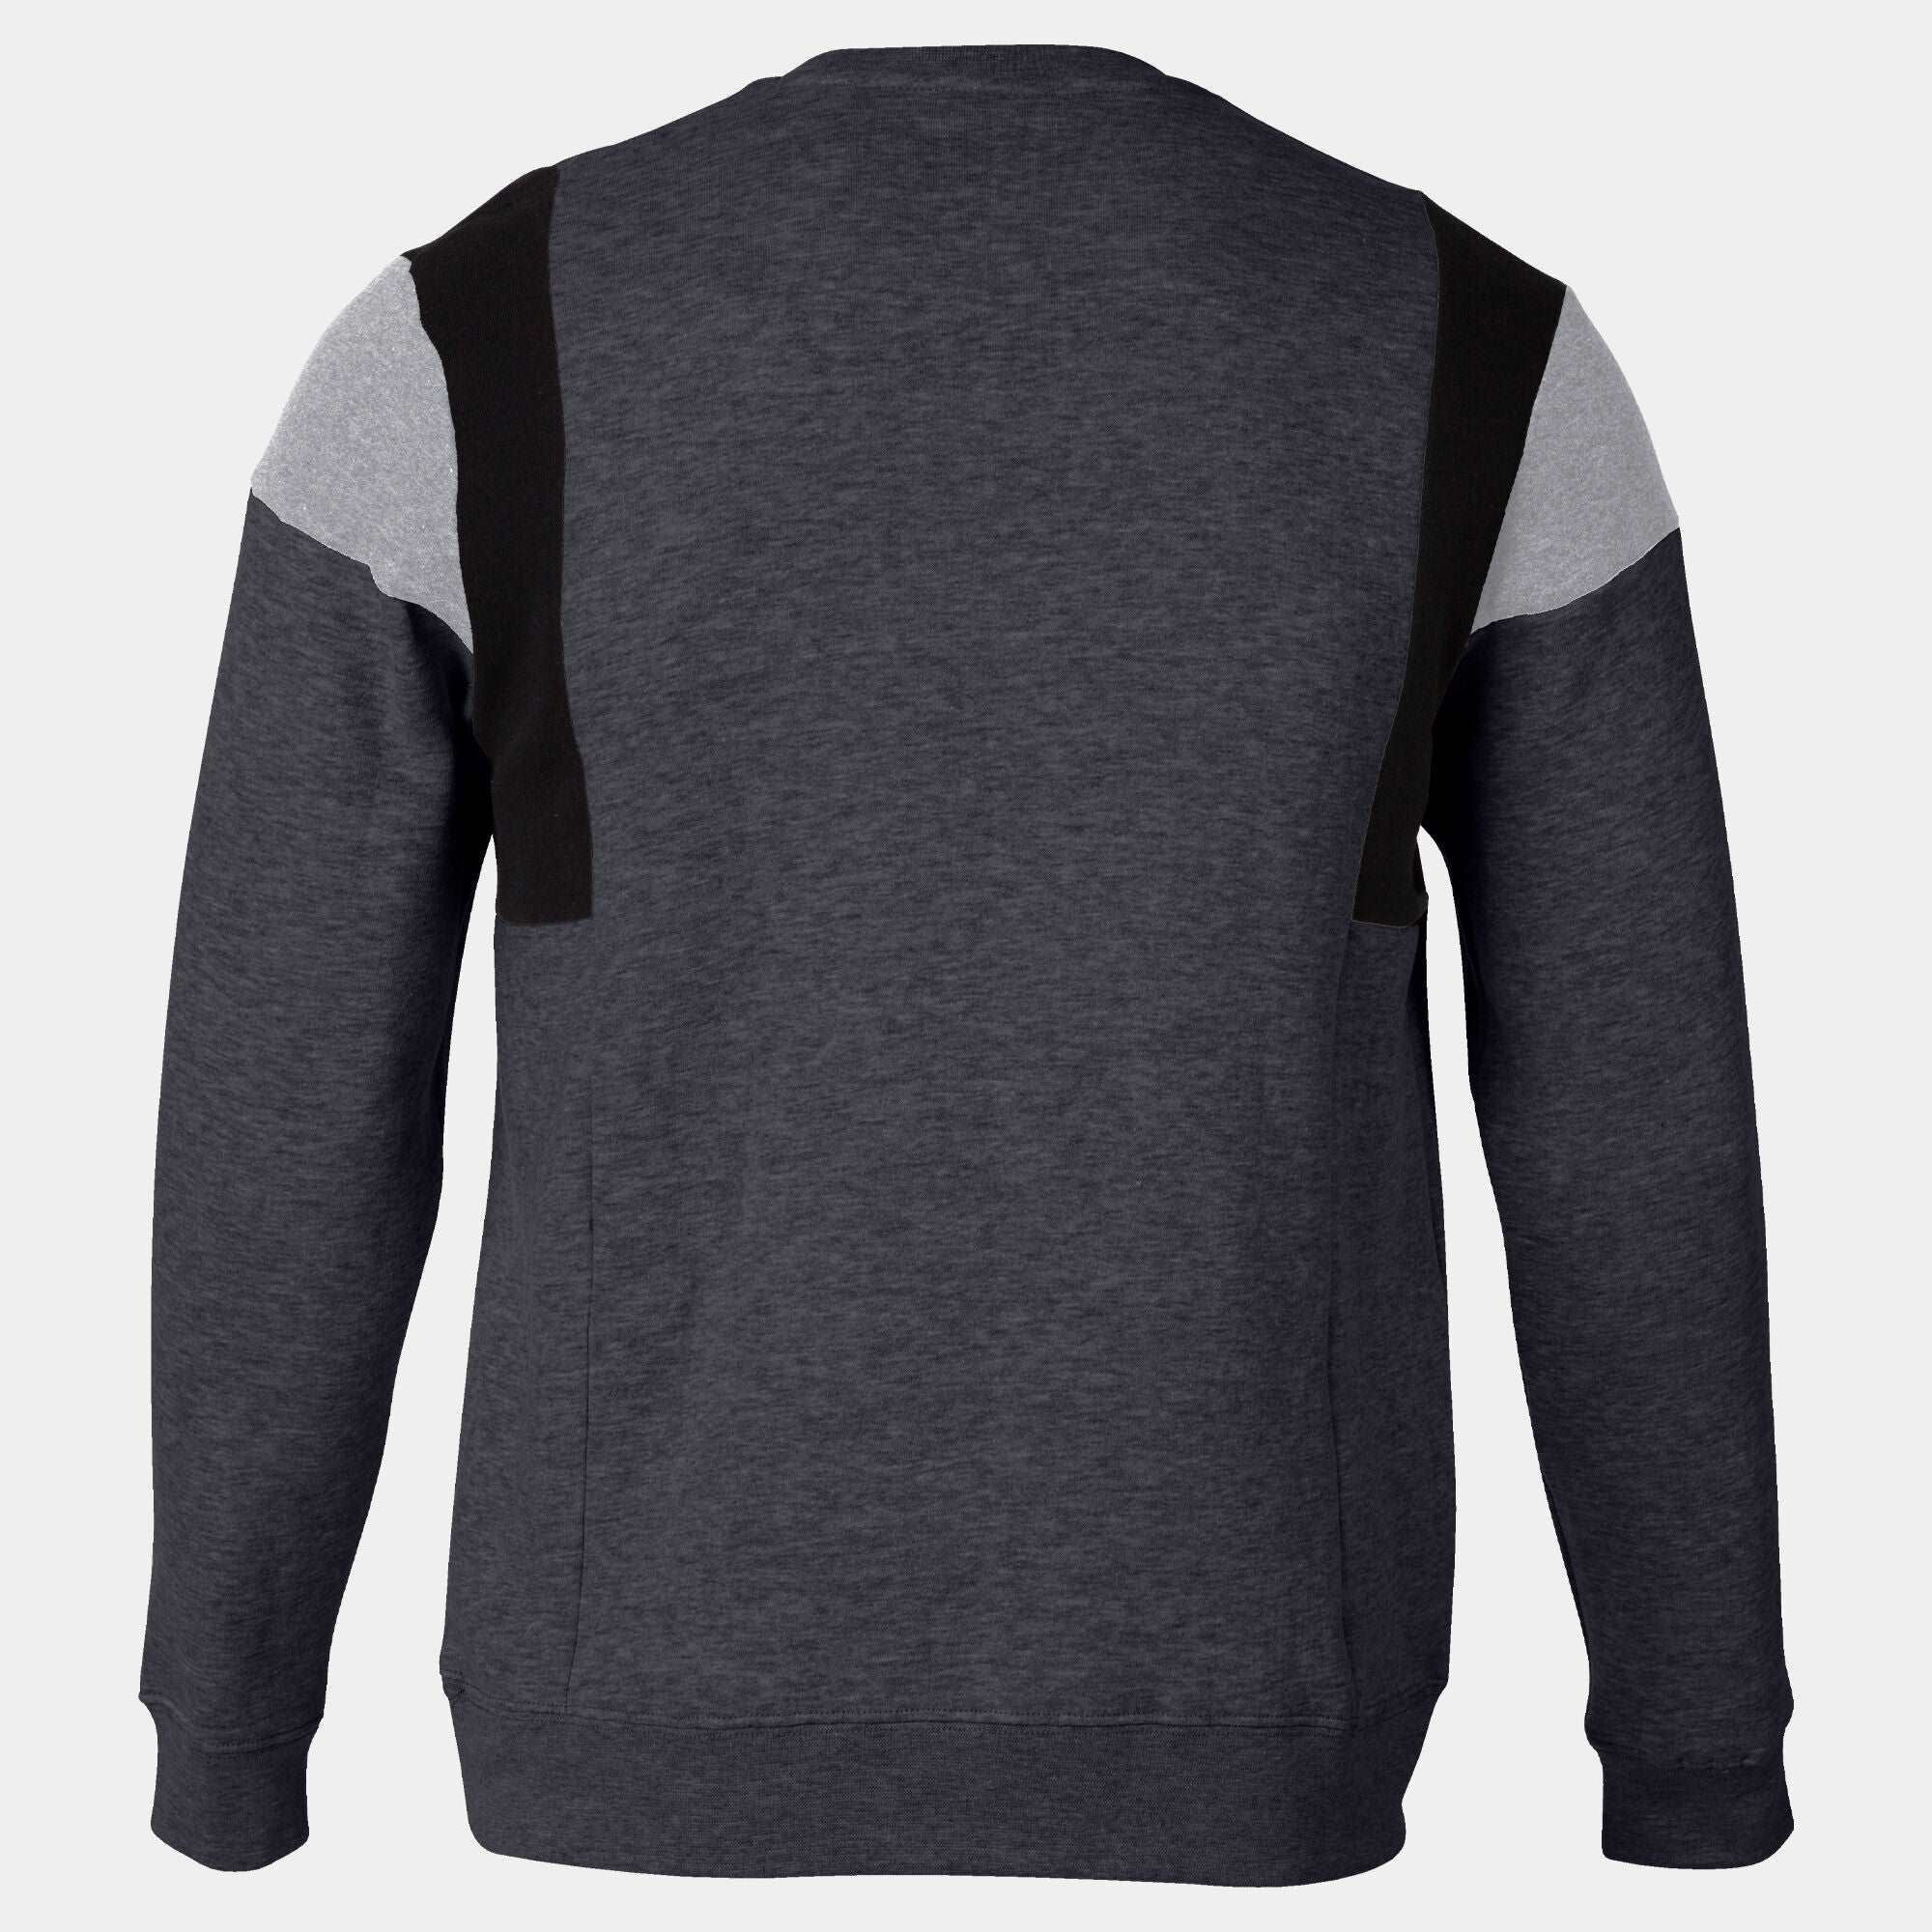 Joma Sweatshirt For Men-MSWS-2007-Dark grey - FactoryX.pk